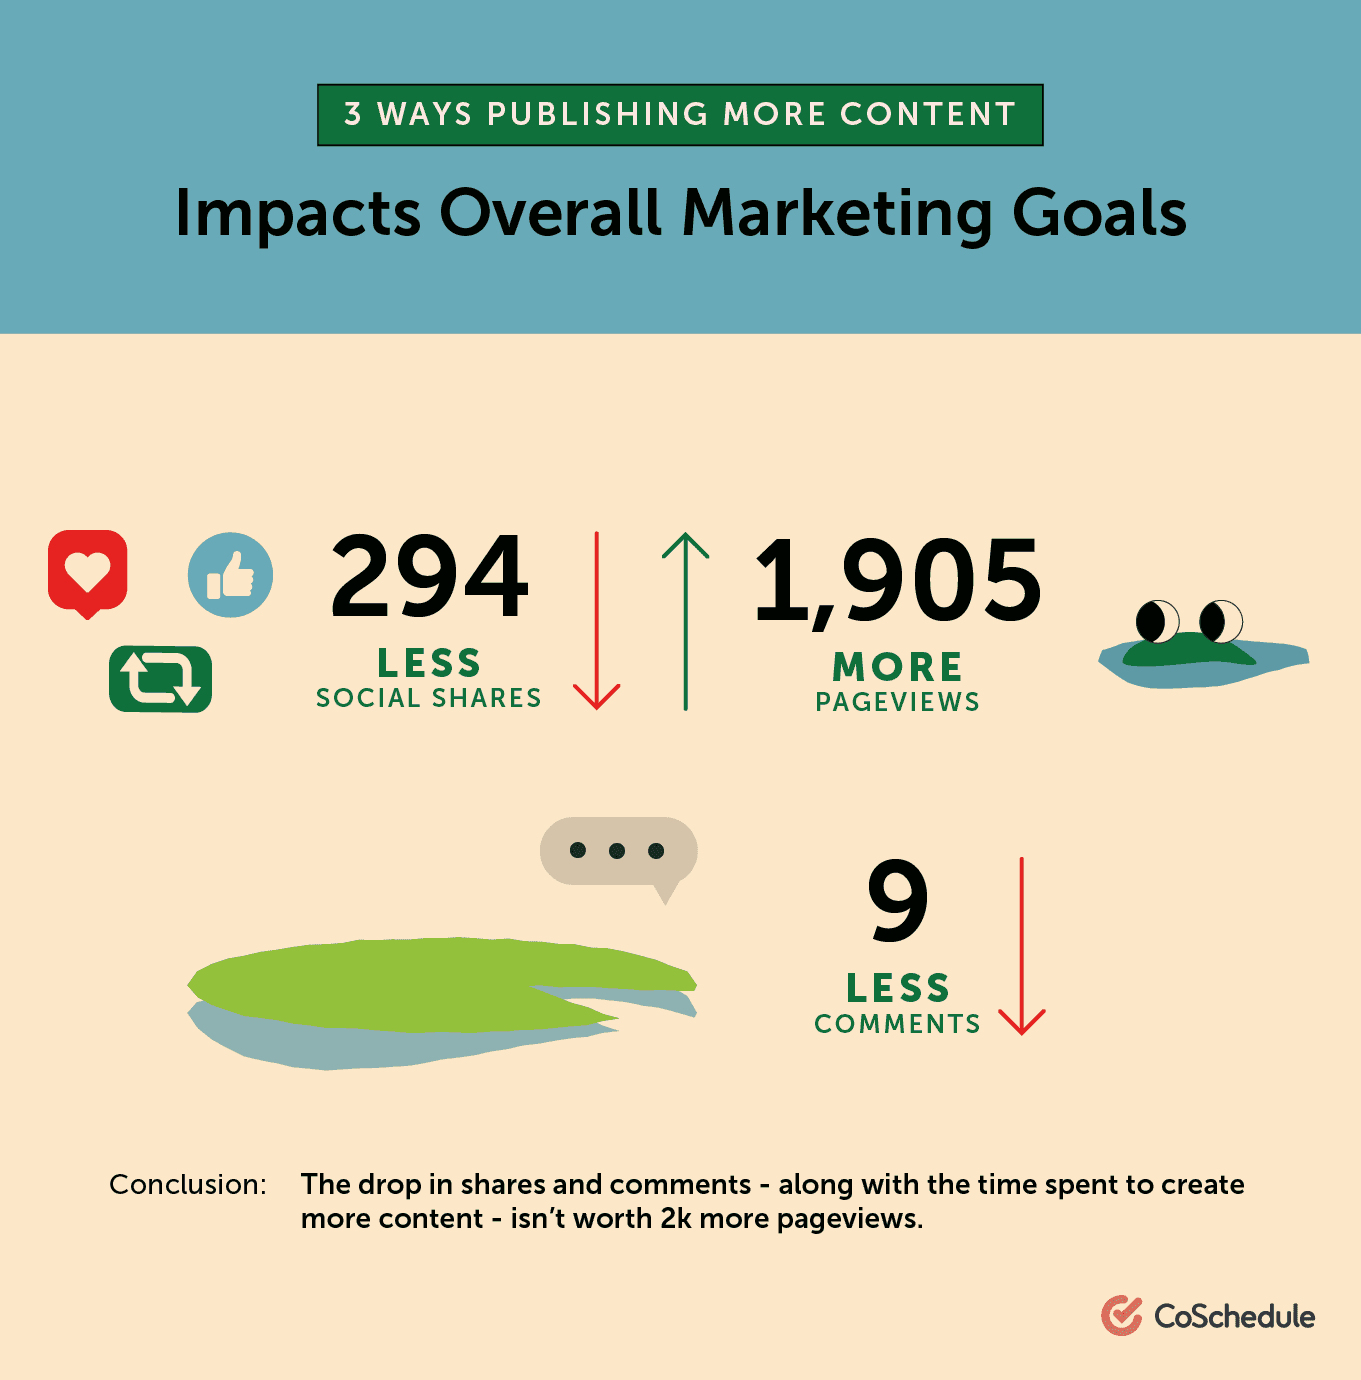 Publishing more content impacts marketing goals